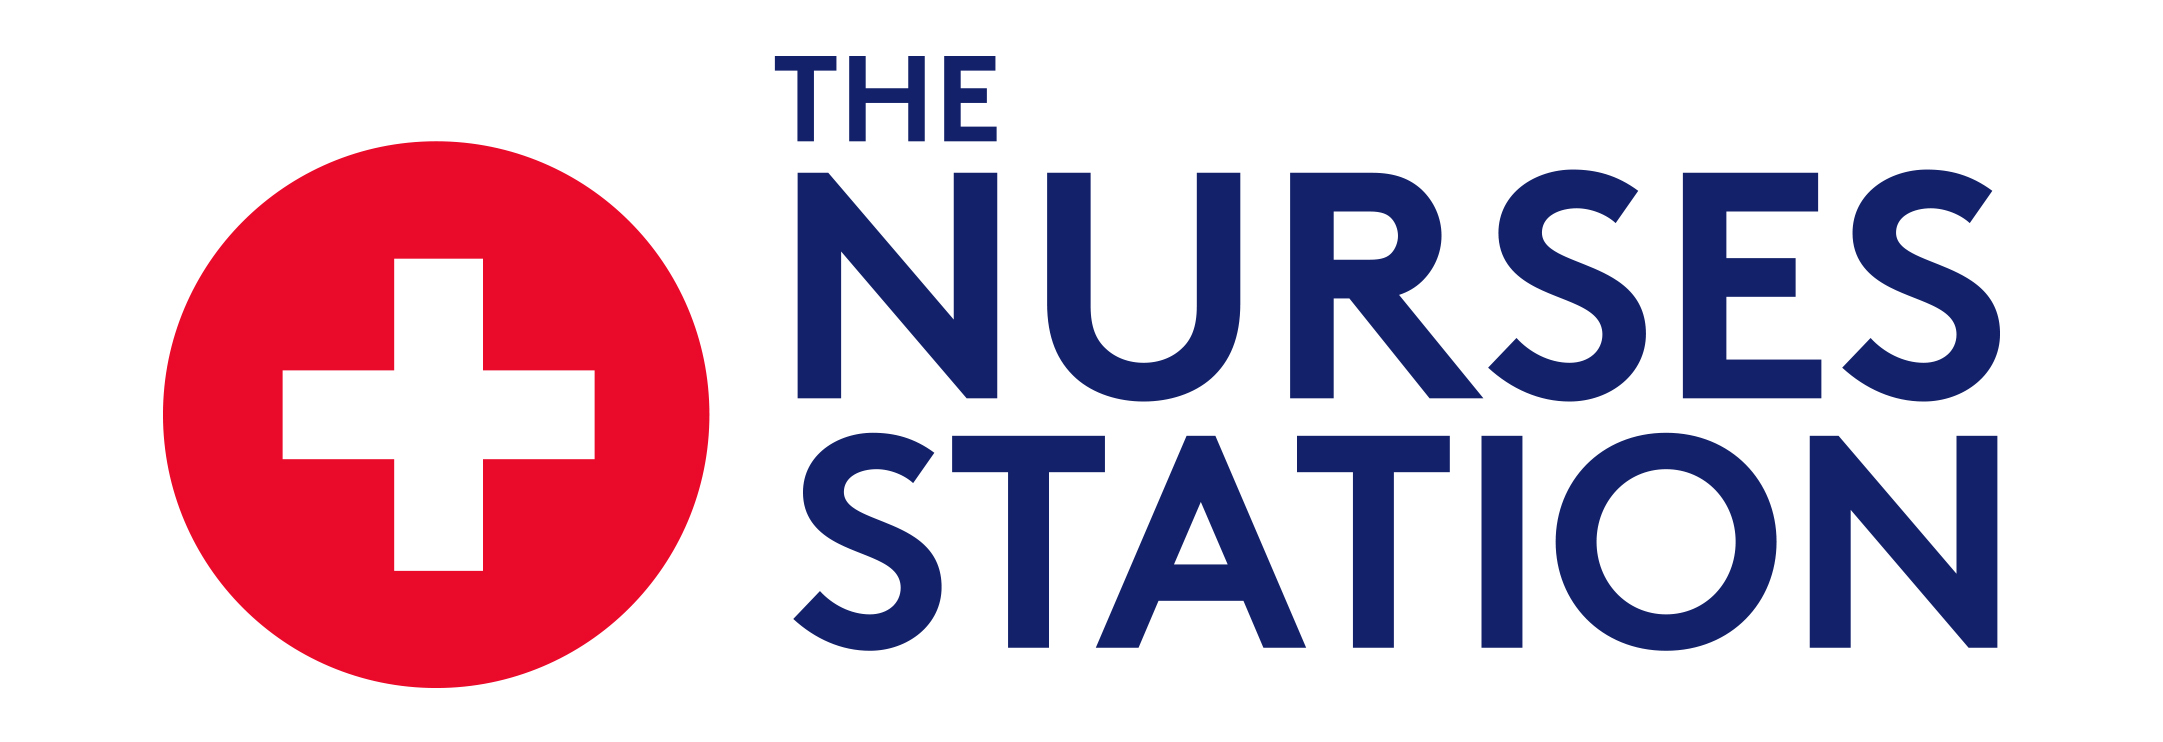 nurses station logo